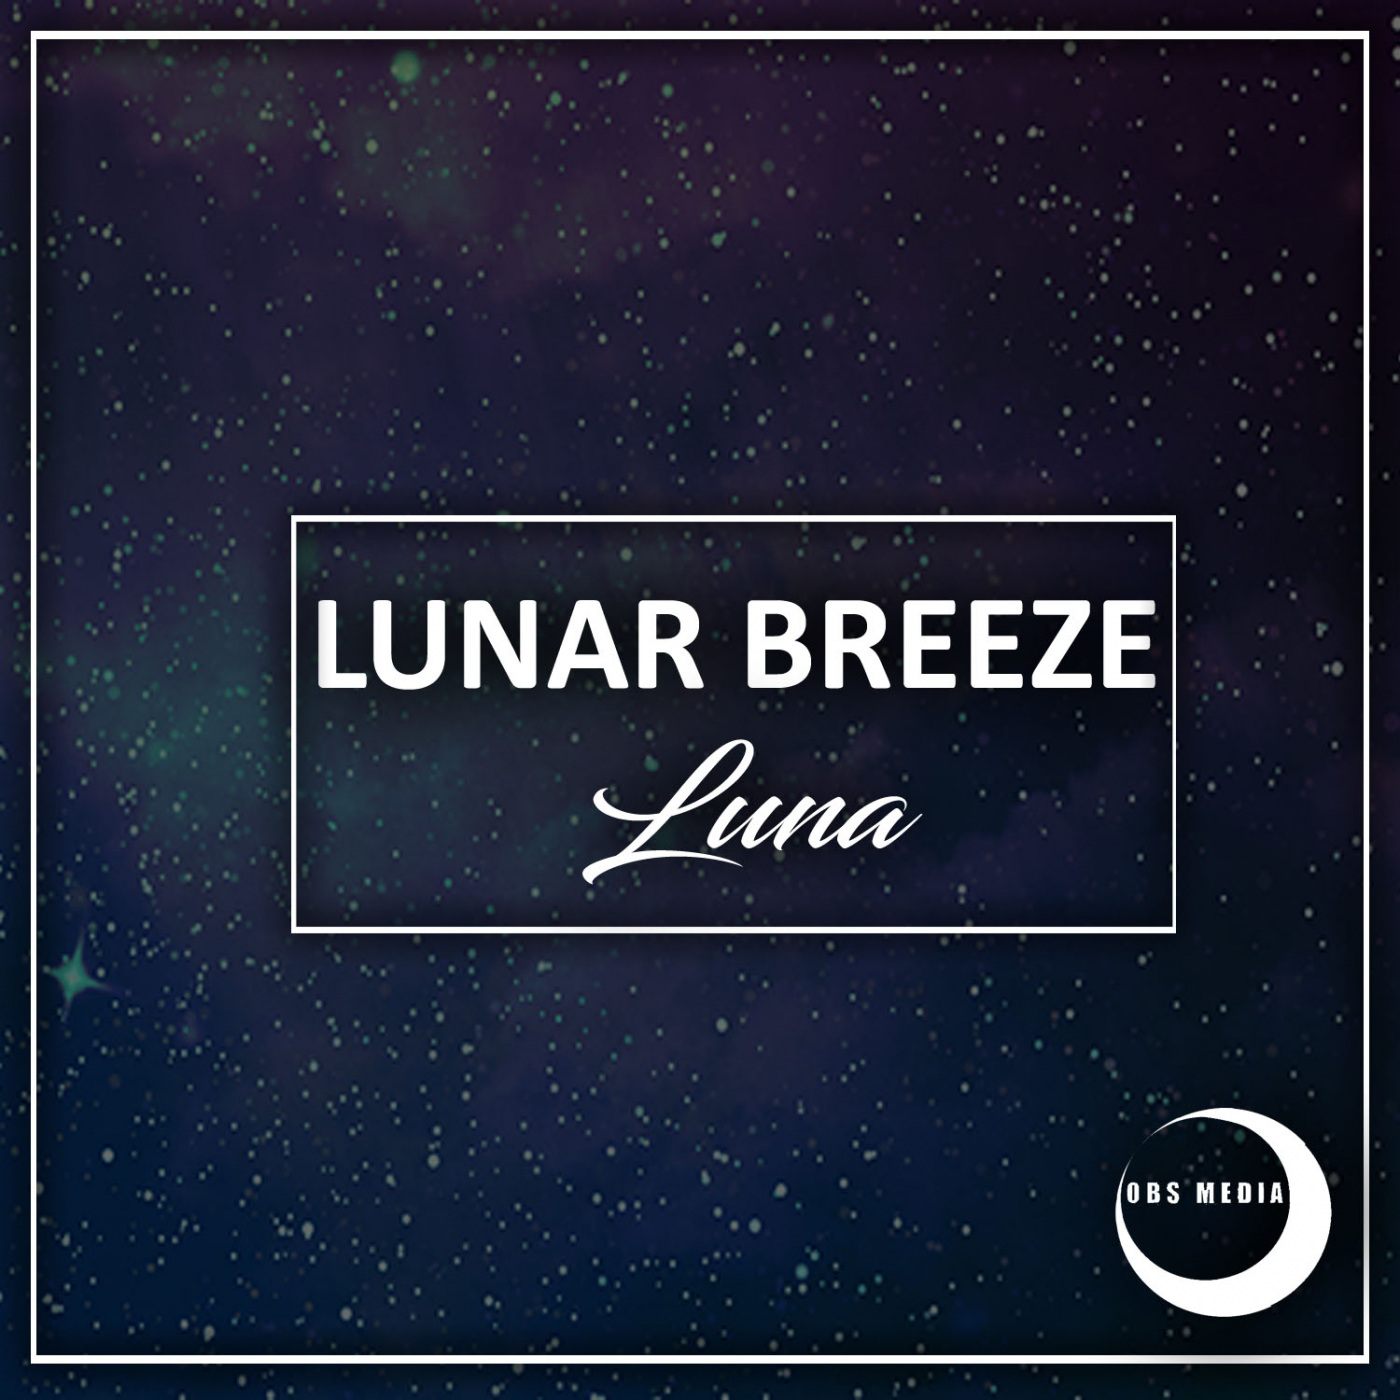 Lunar Breeze - Luna / OBS Media